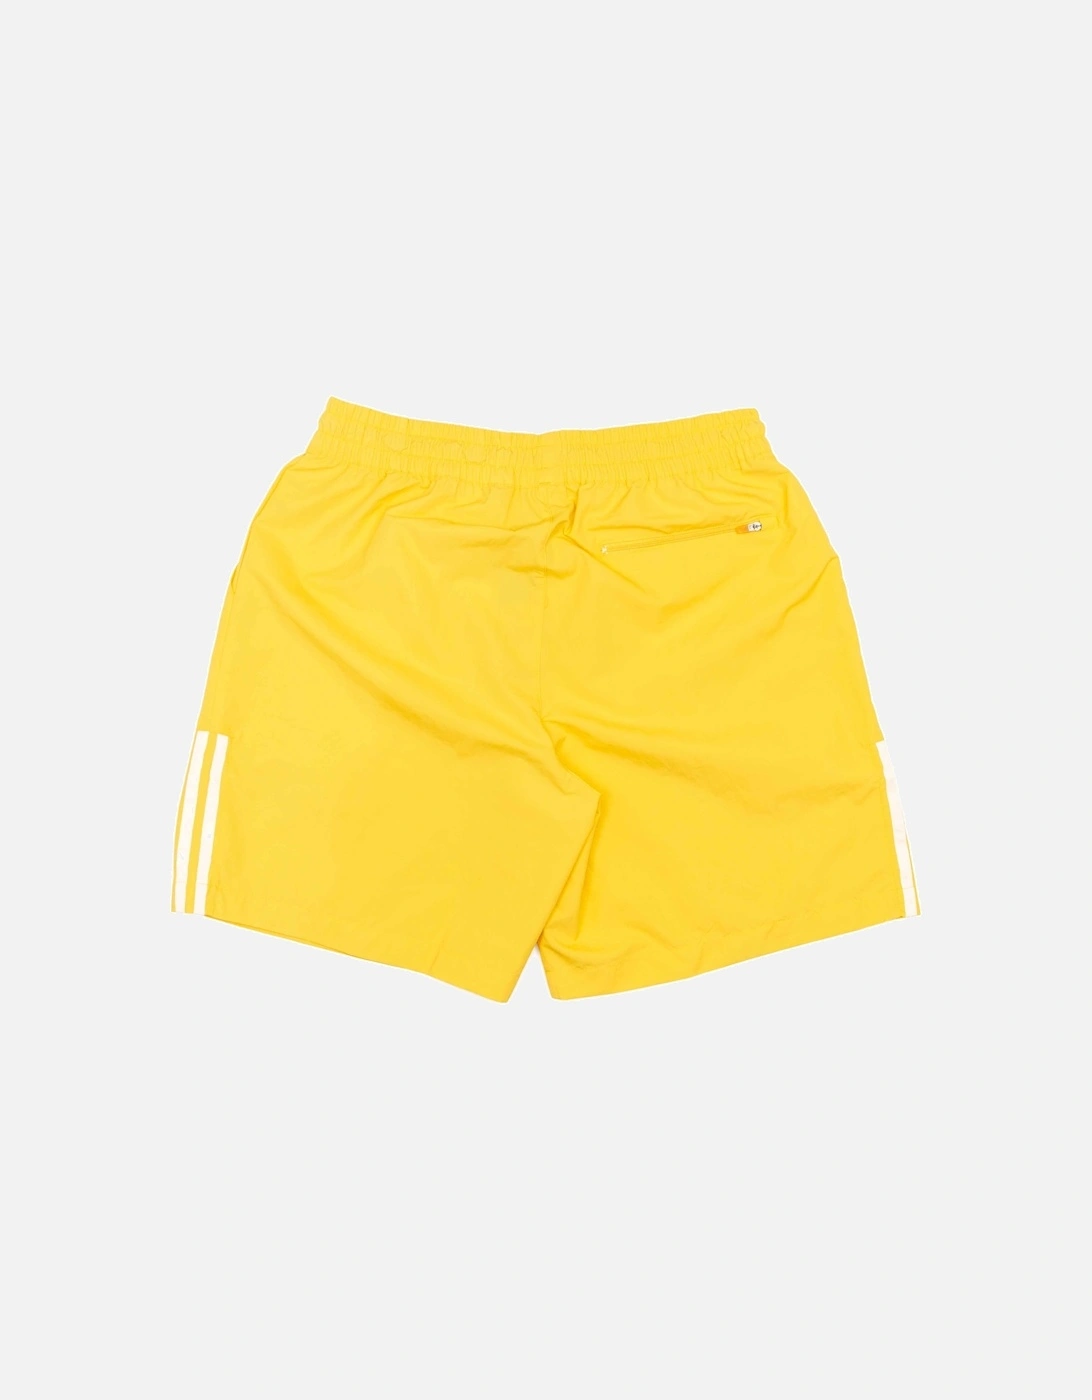 Water Shorts - Bold Gold/Cream White